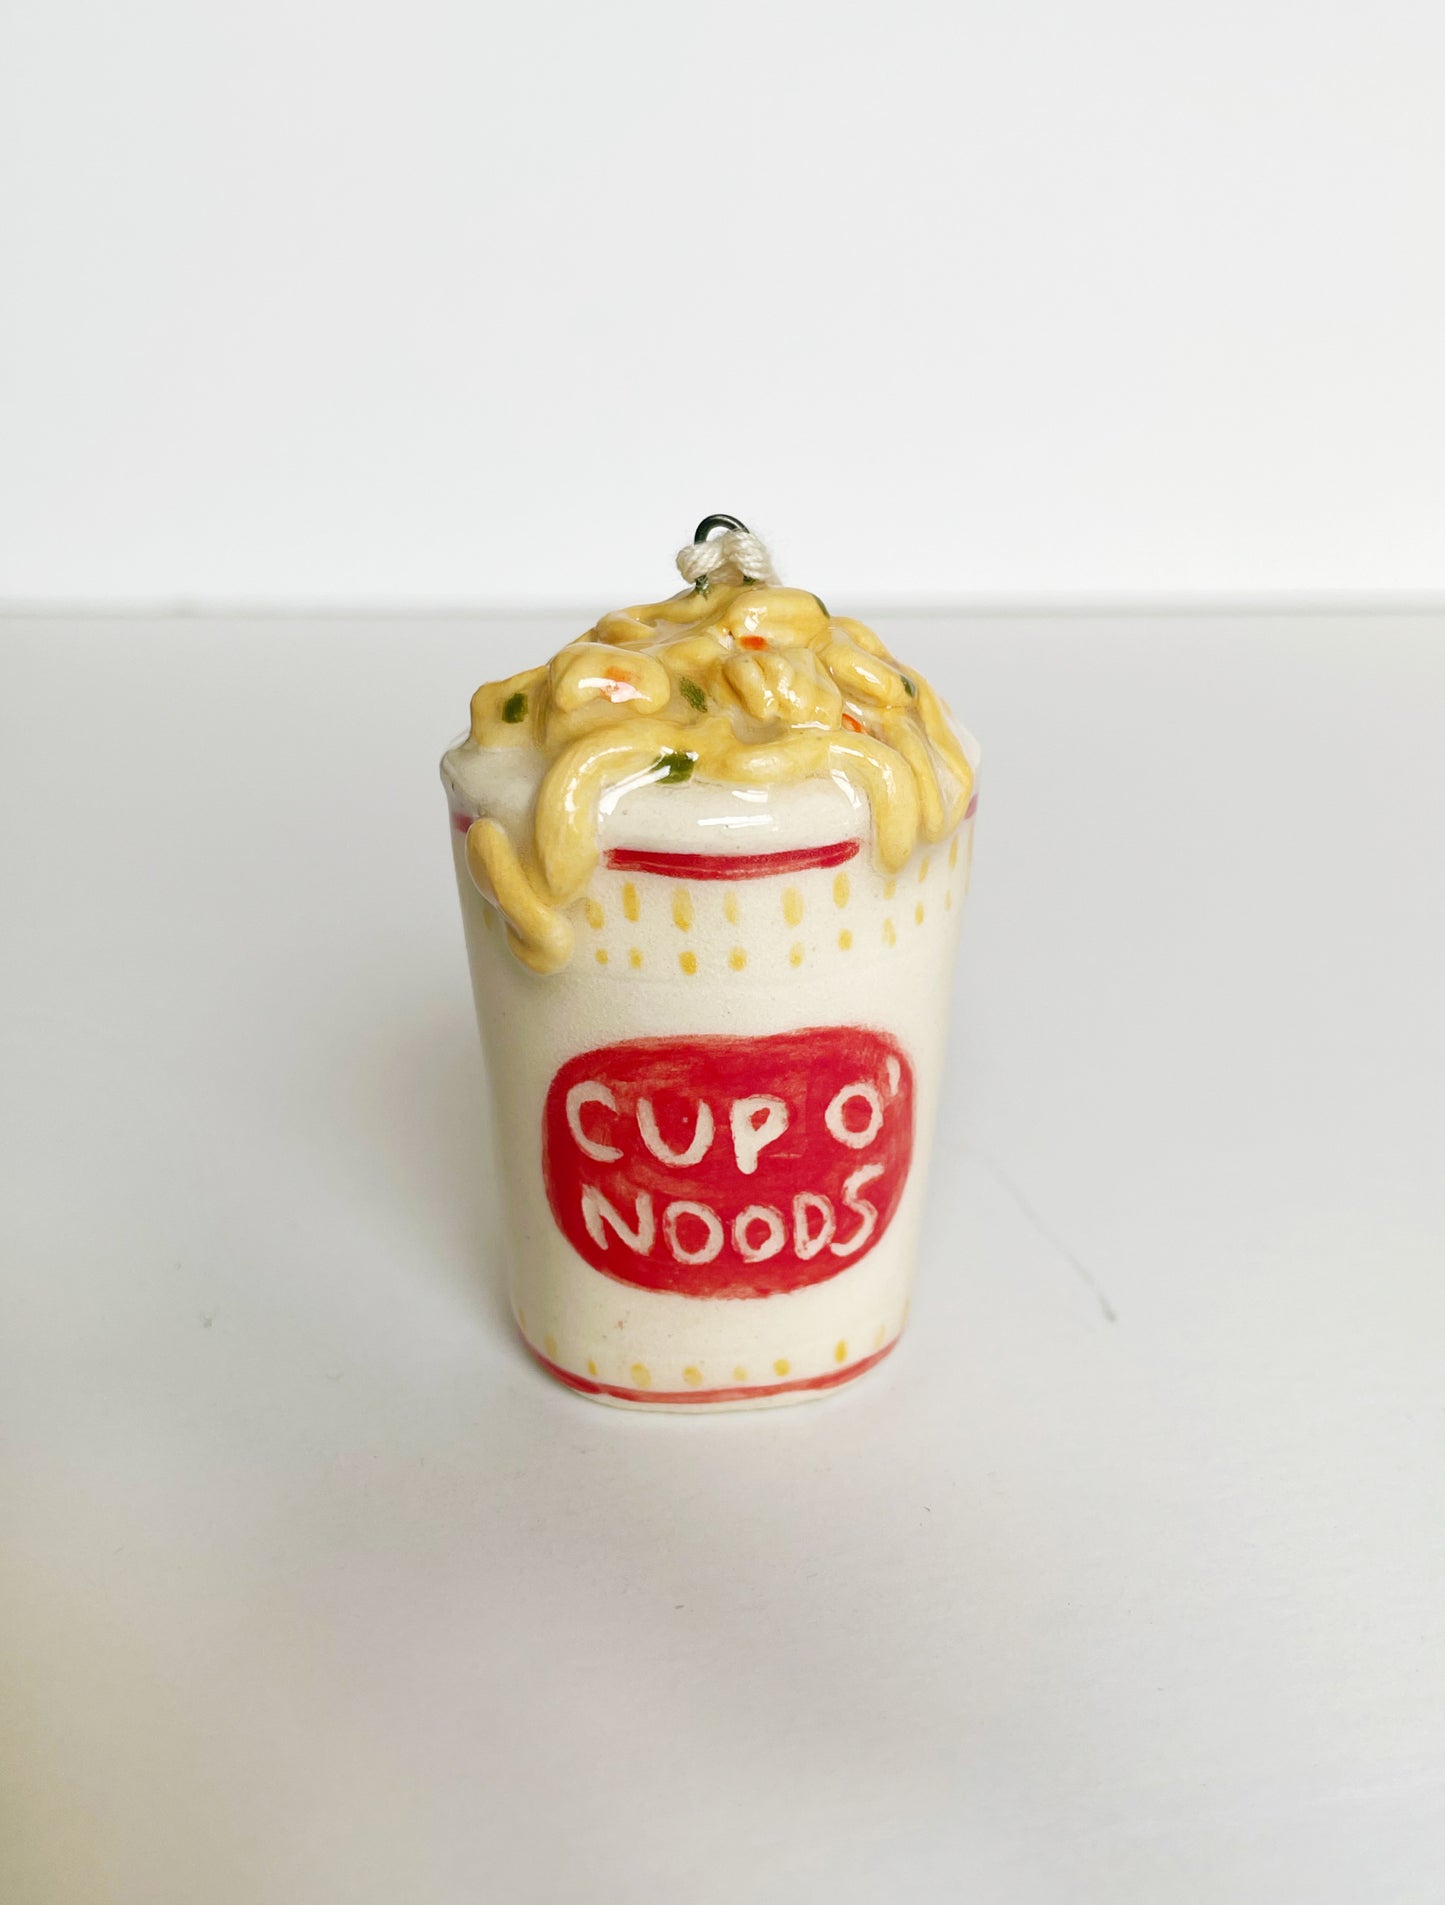 Ramen Noodle Cup O’ Noods Ceramic Ornament